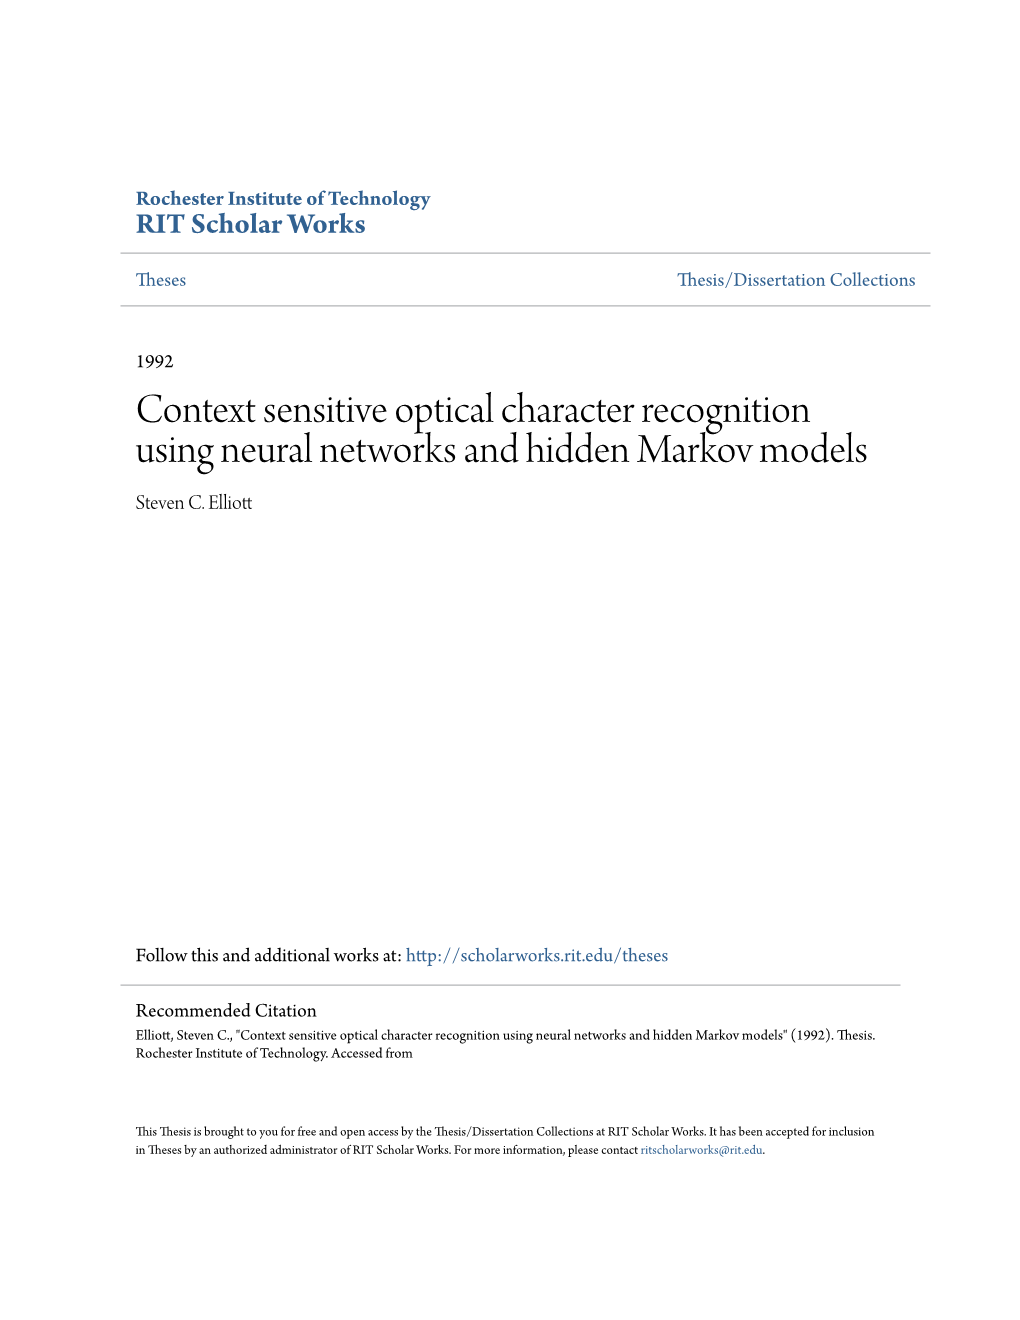 Context Sensitive Optical Character Recognition Using Neural Networks and Hidden Markov Models Steven C